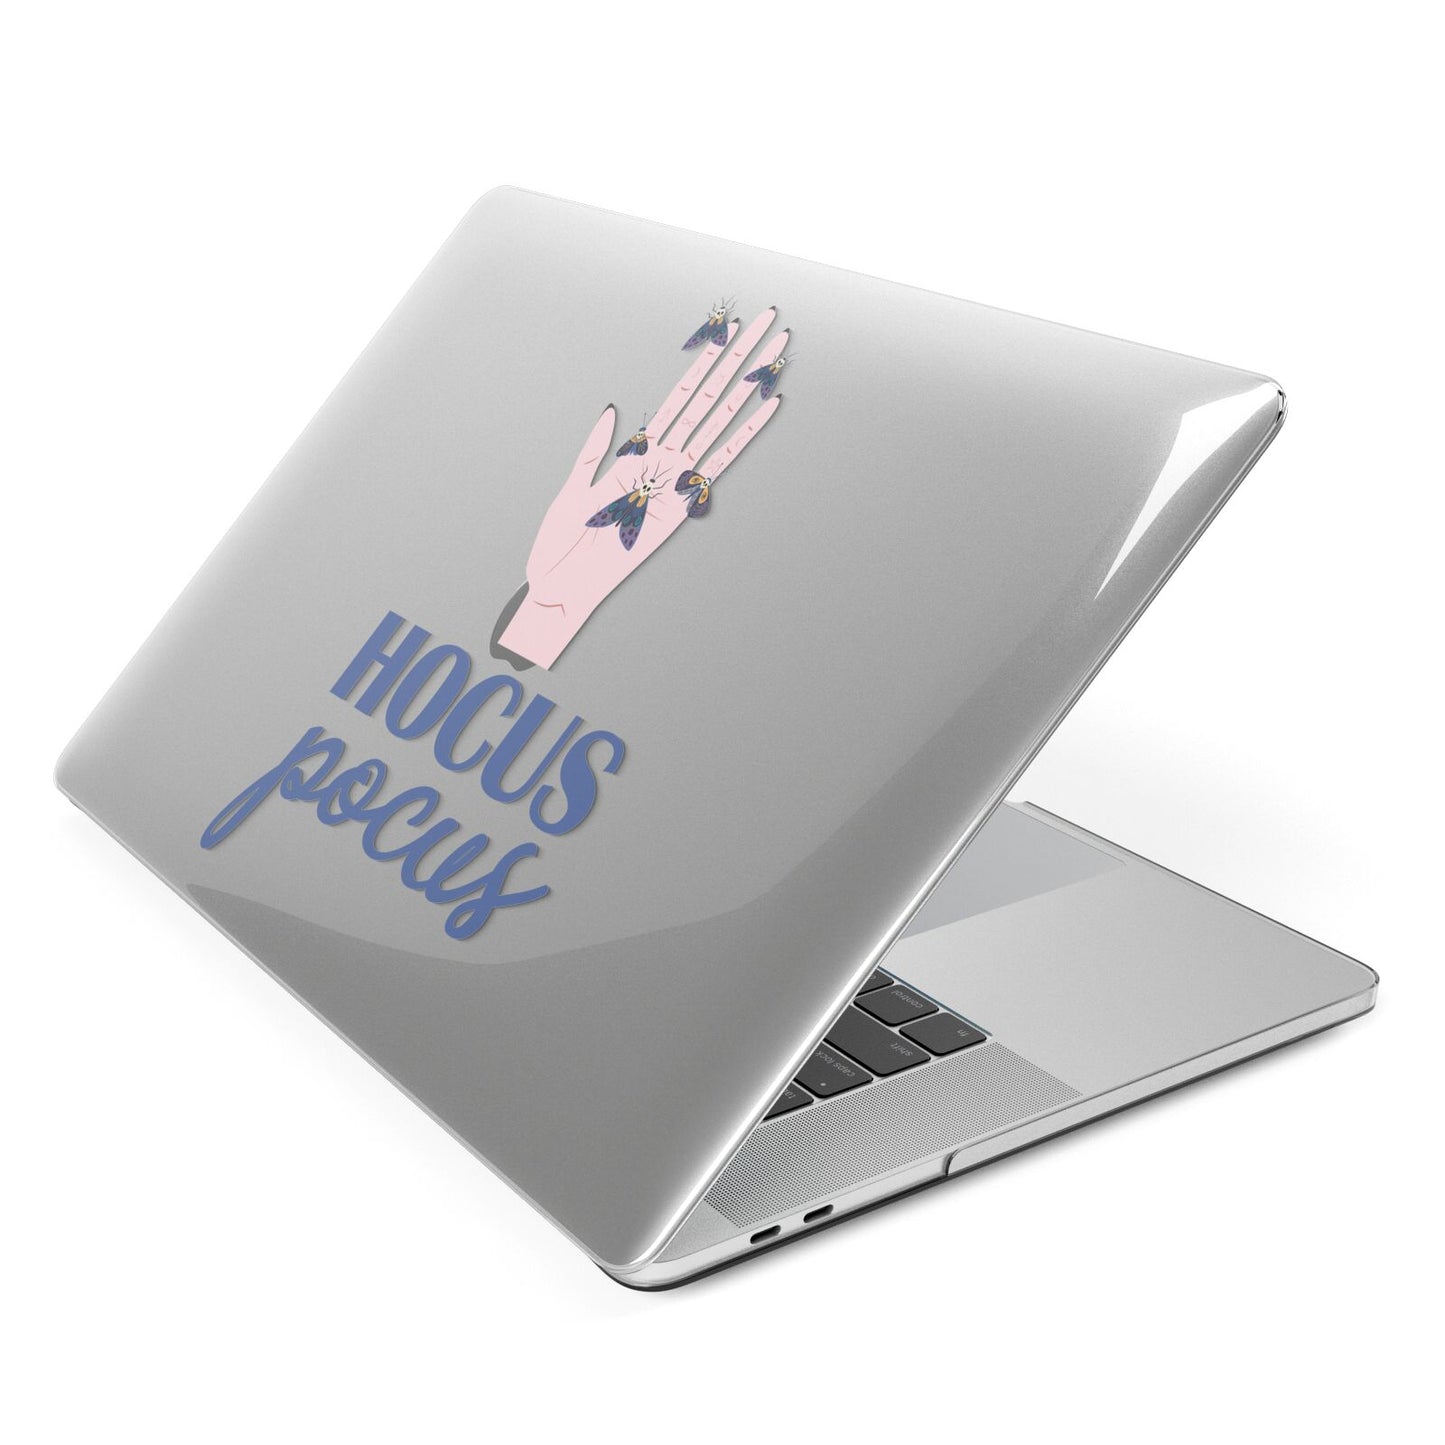 Hocus Pocus Witch Hand Apple MacBook Case Side View